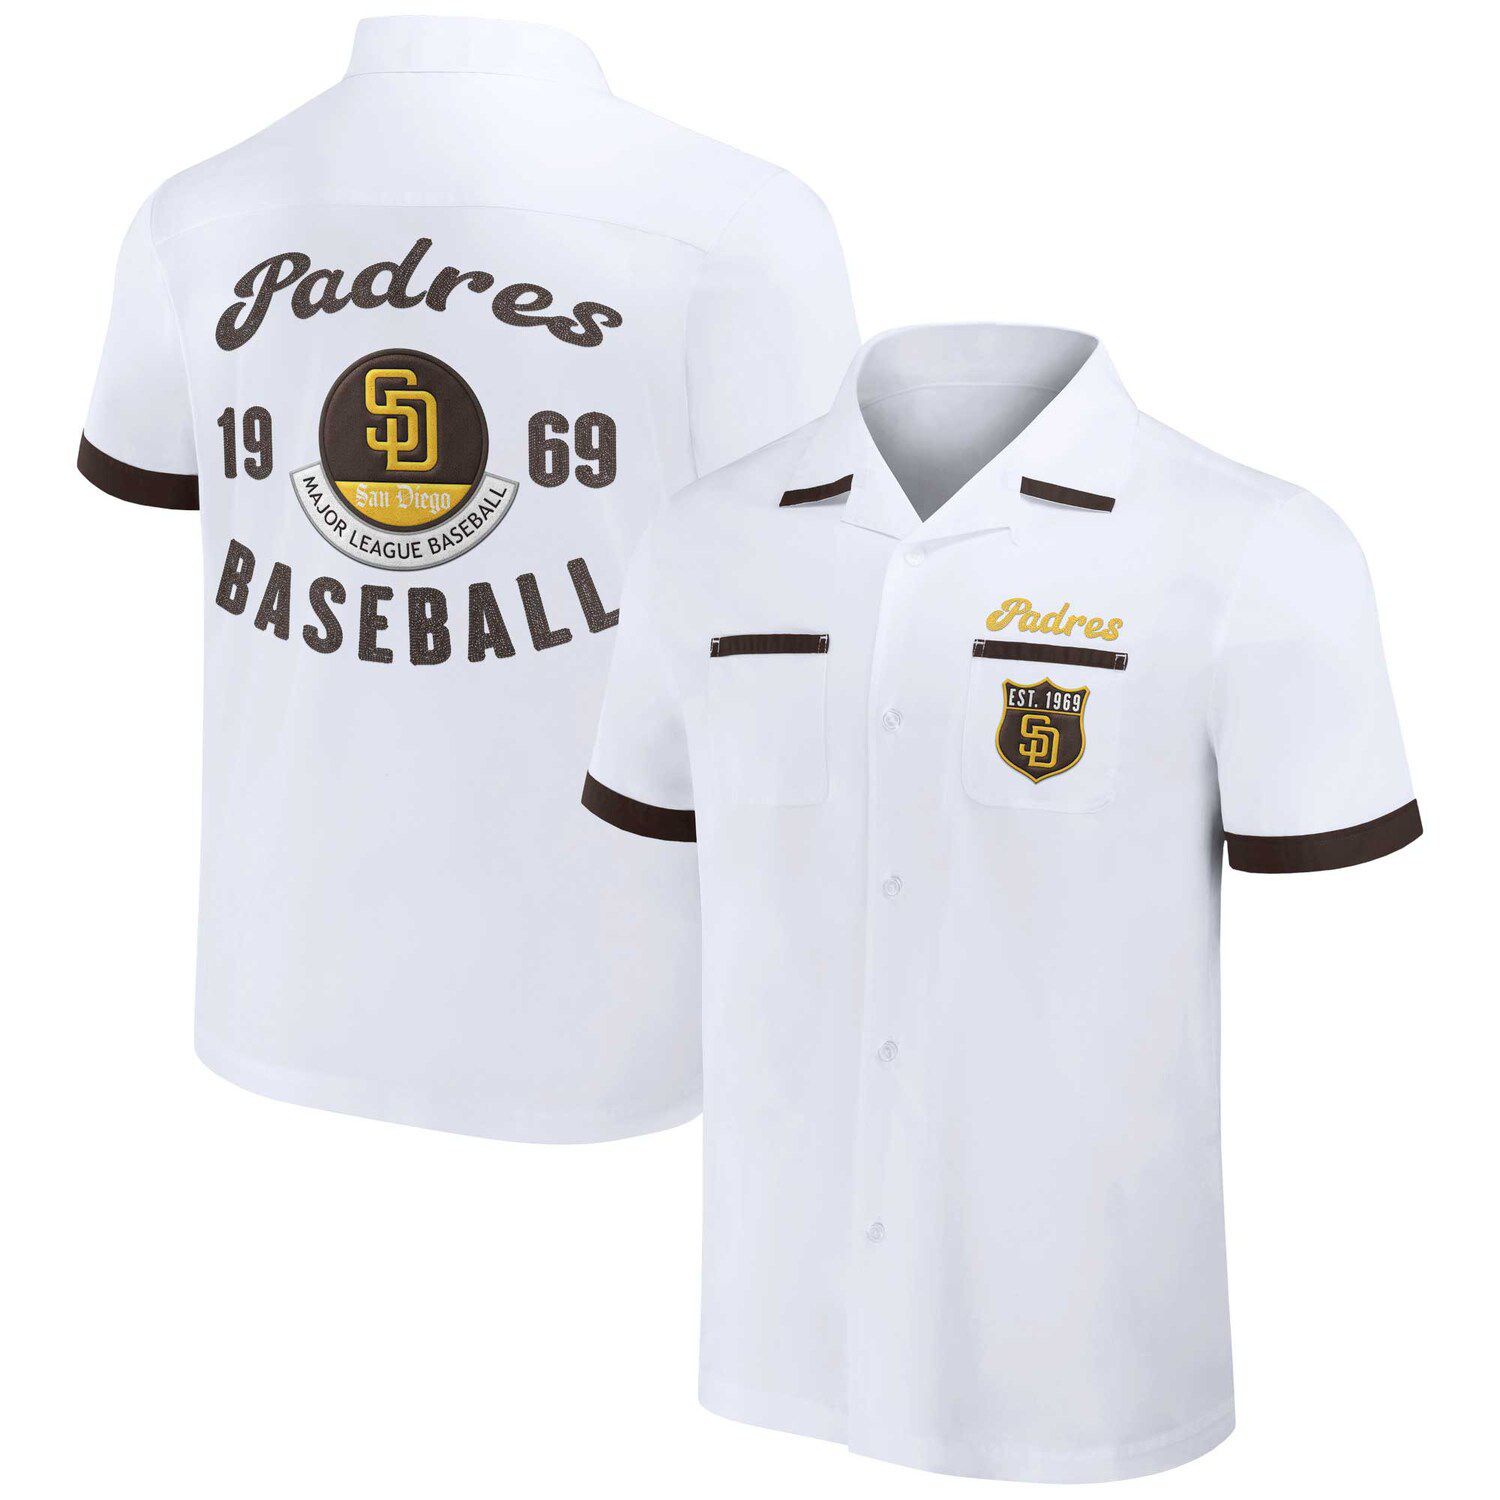 San Diego Padres Fanatics Branded Women's City Pride V-Neck T-Shirt - White